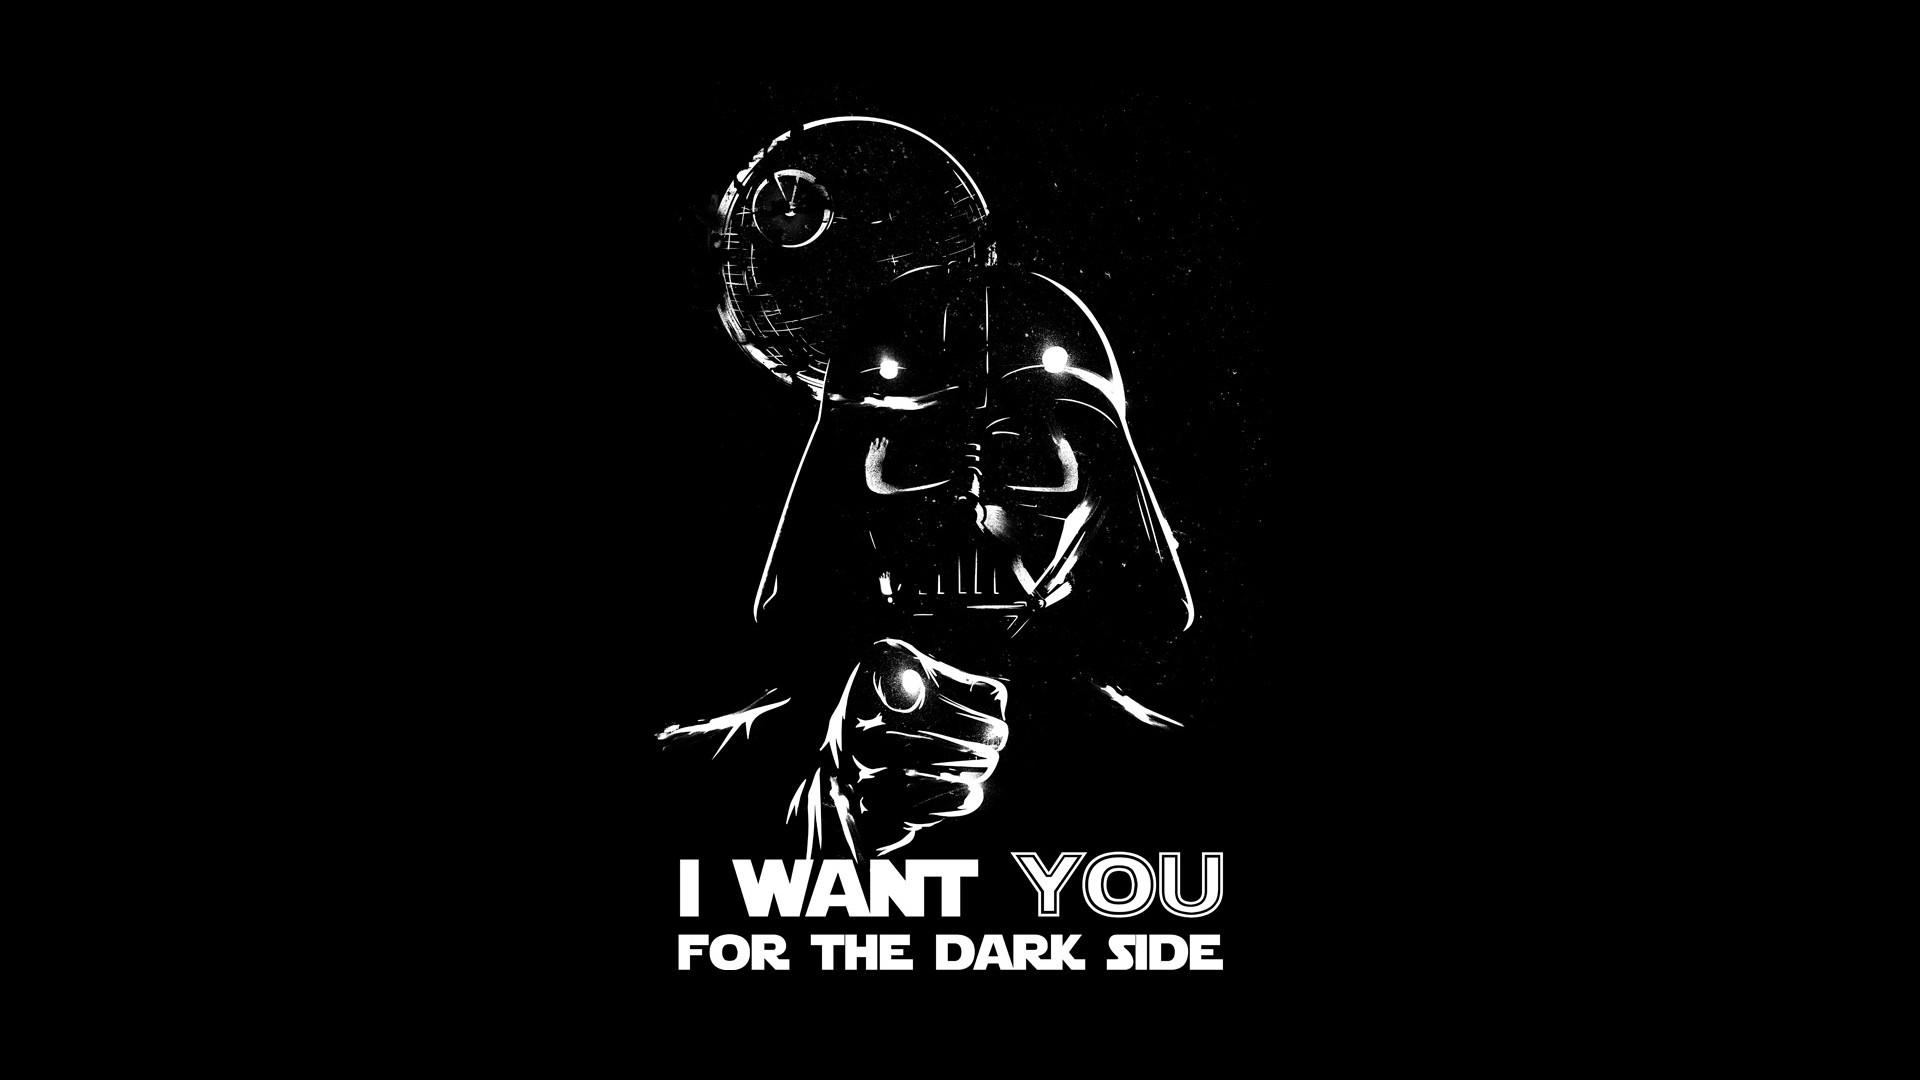 Darth Vader Wallpaper, Picture, Image